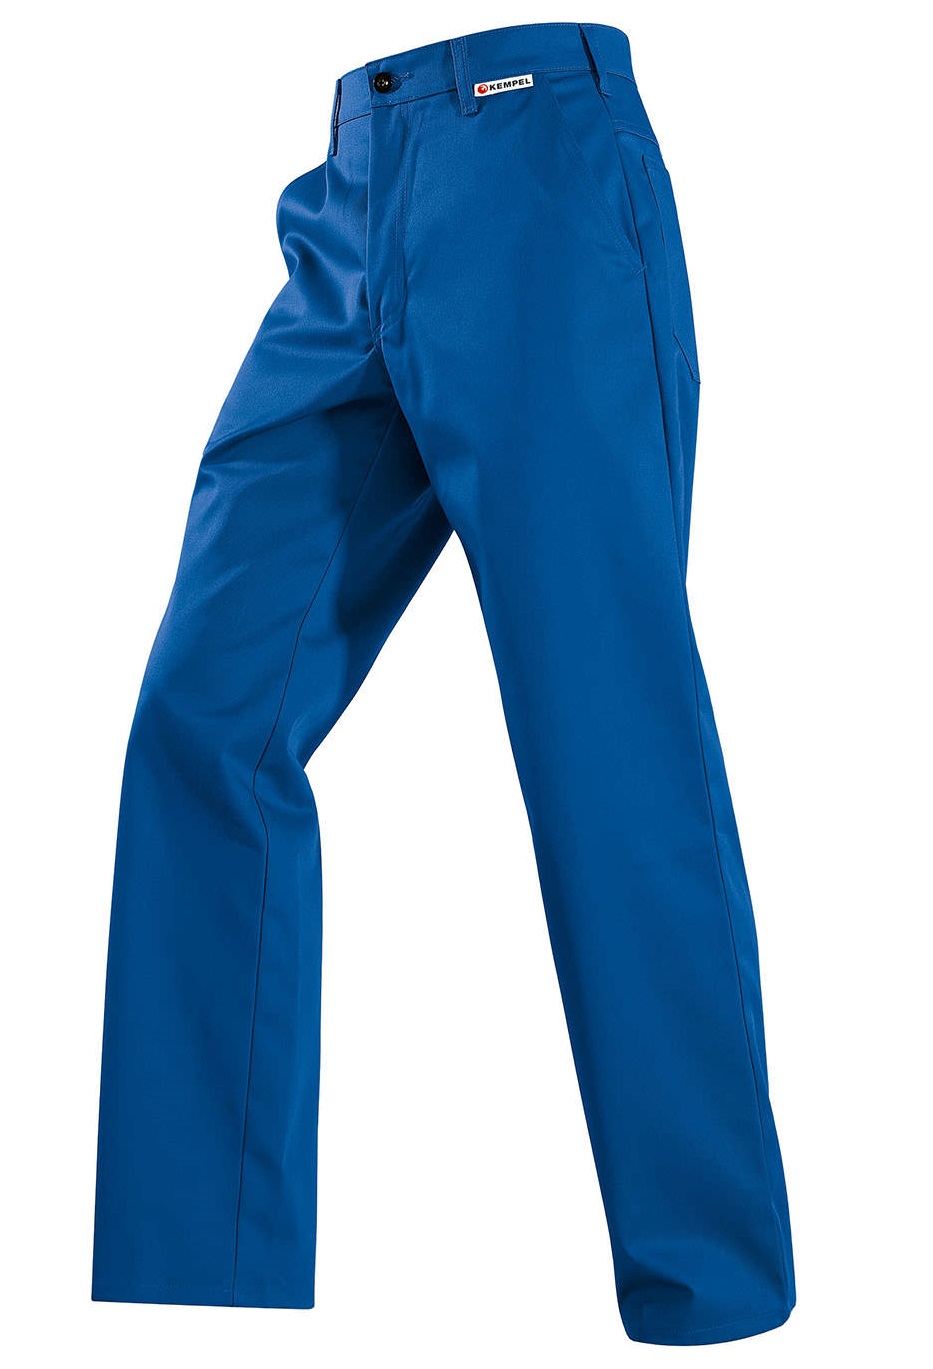 KEMPEL Bundhose Arbeitshose Berufshose Workerhose Arbeitskleidung Berufskleidung kornblau ca 325g